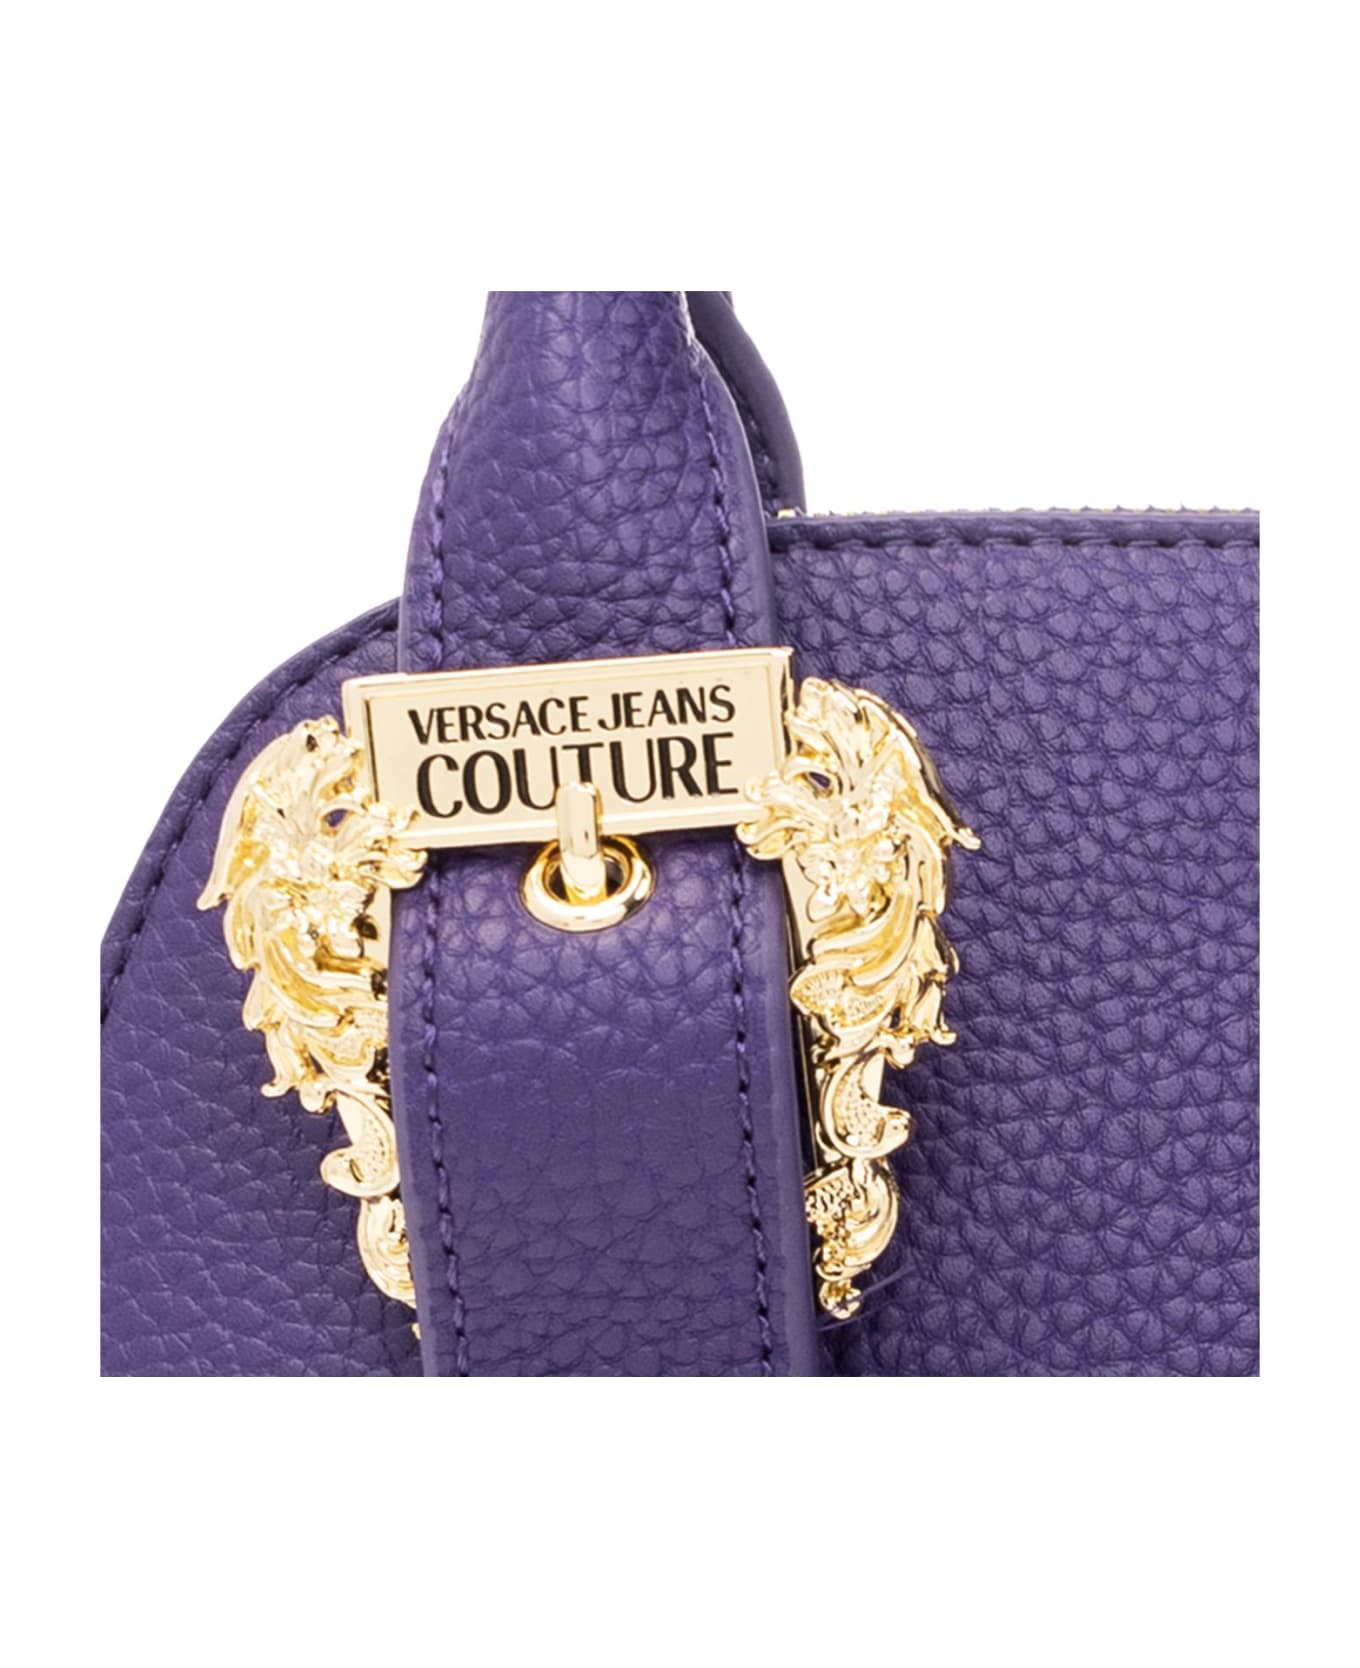 Versace Jeans Couture Bag - PURPLE